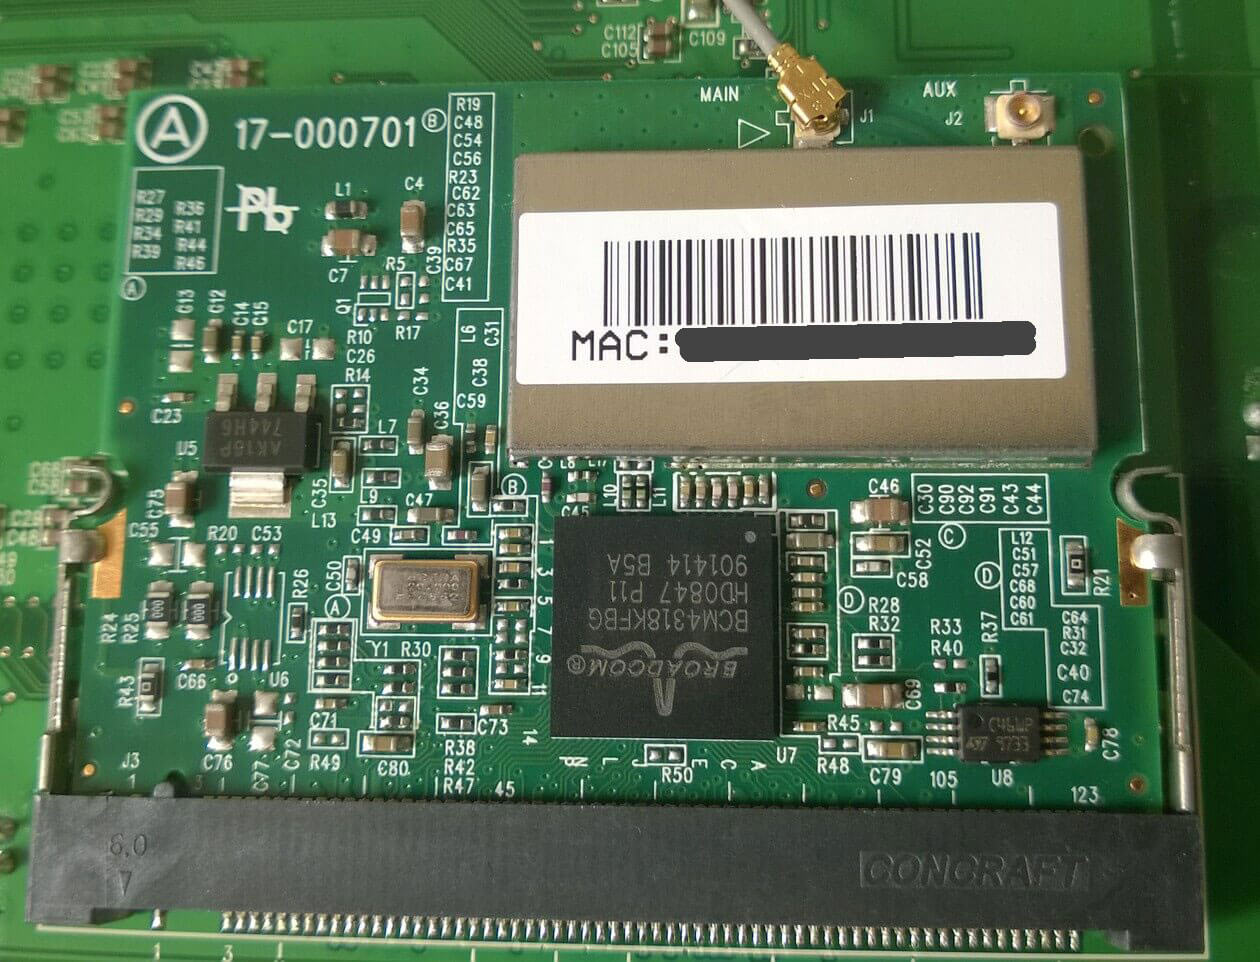 Detailansicht des Empfangsmodule mit Prozessor Broadcom BCM4318KFBG 802.11b/g WLAN